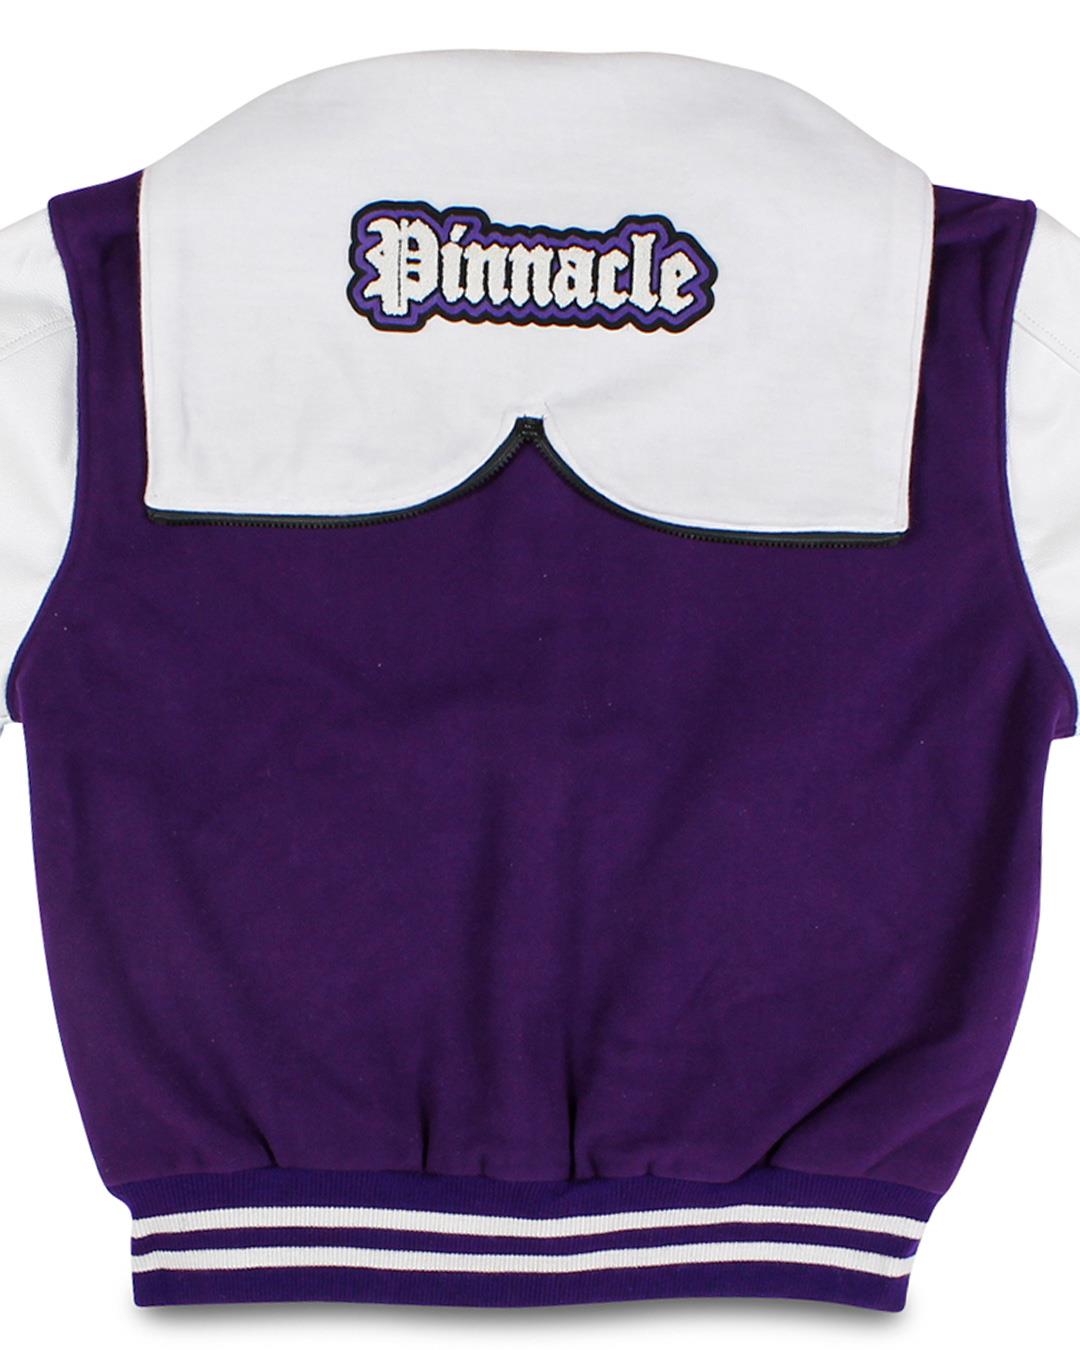 Pinnacle Canyon Academy Letterman Jacket, Price UT - Back